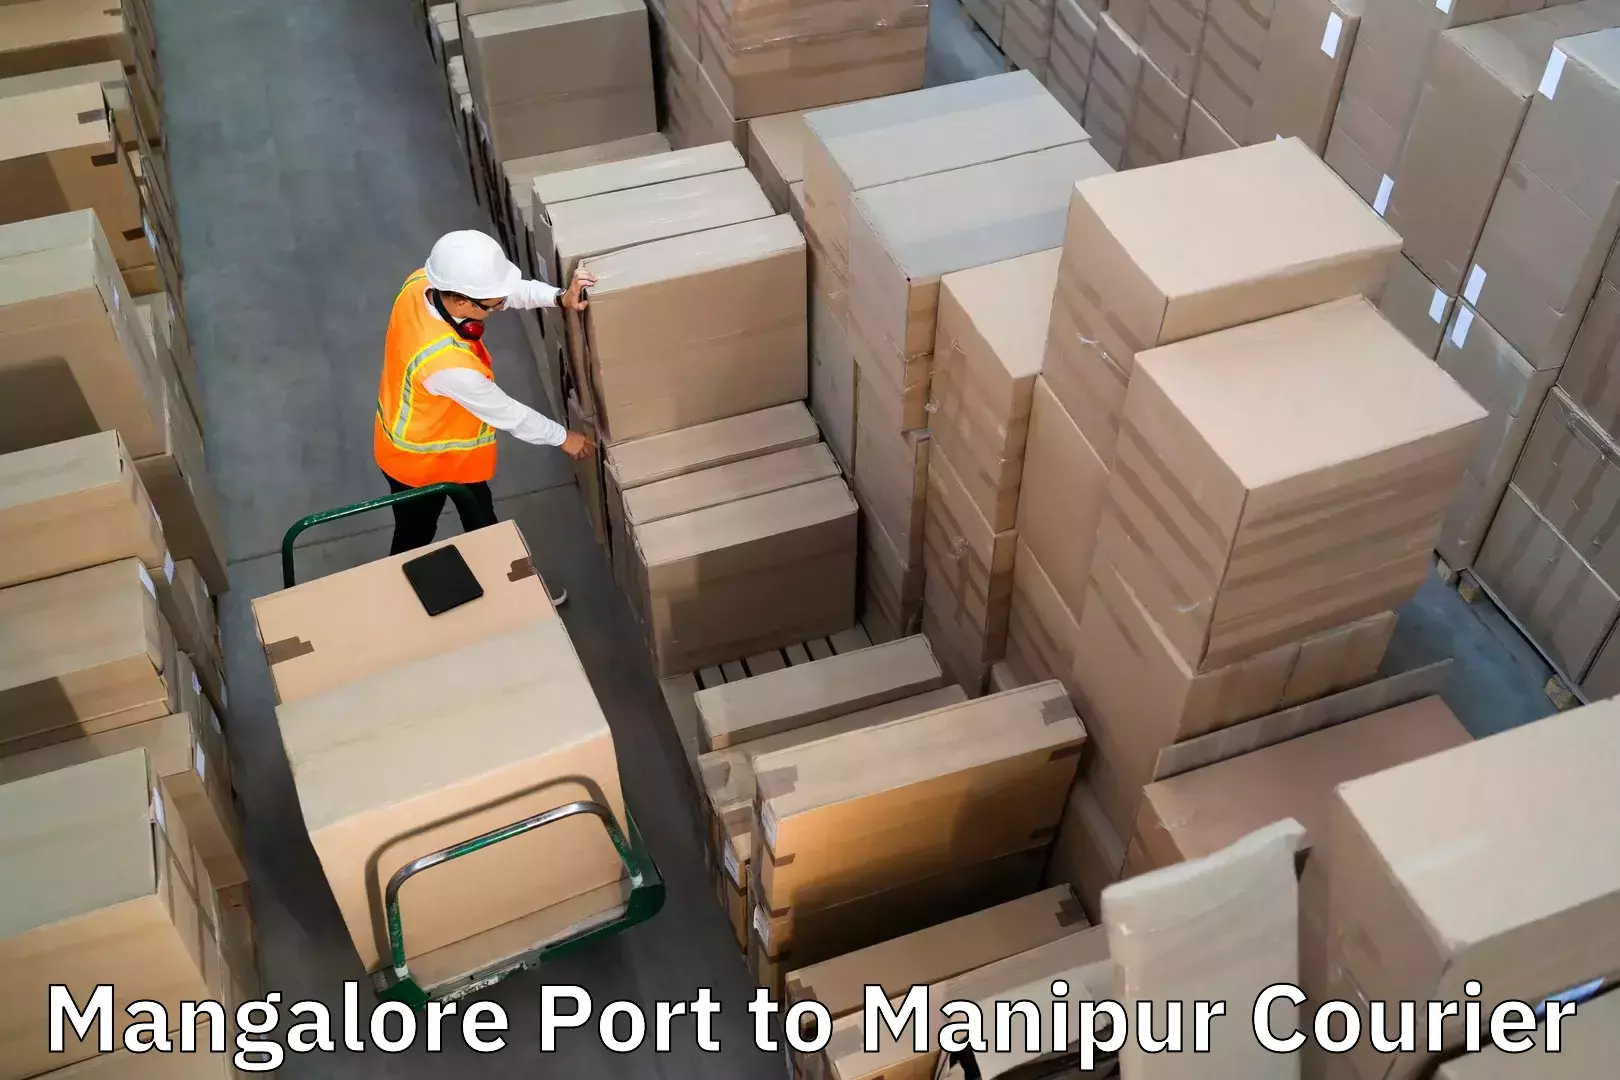 Luggage transport company Mangalore Port to Manipur